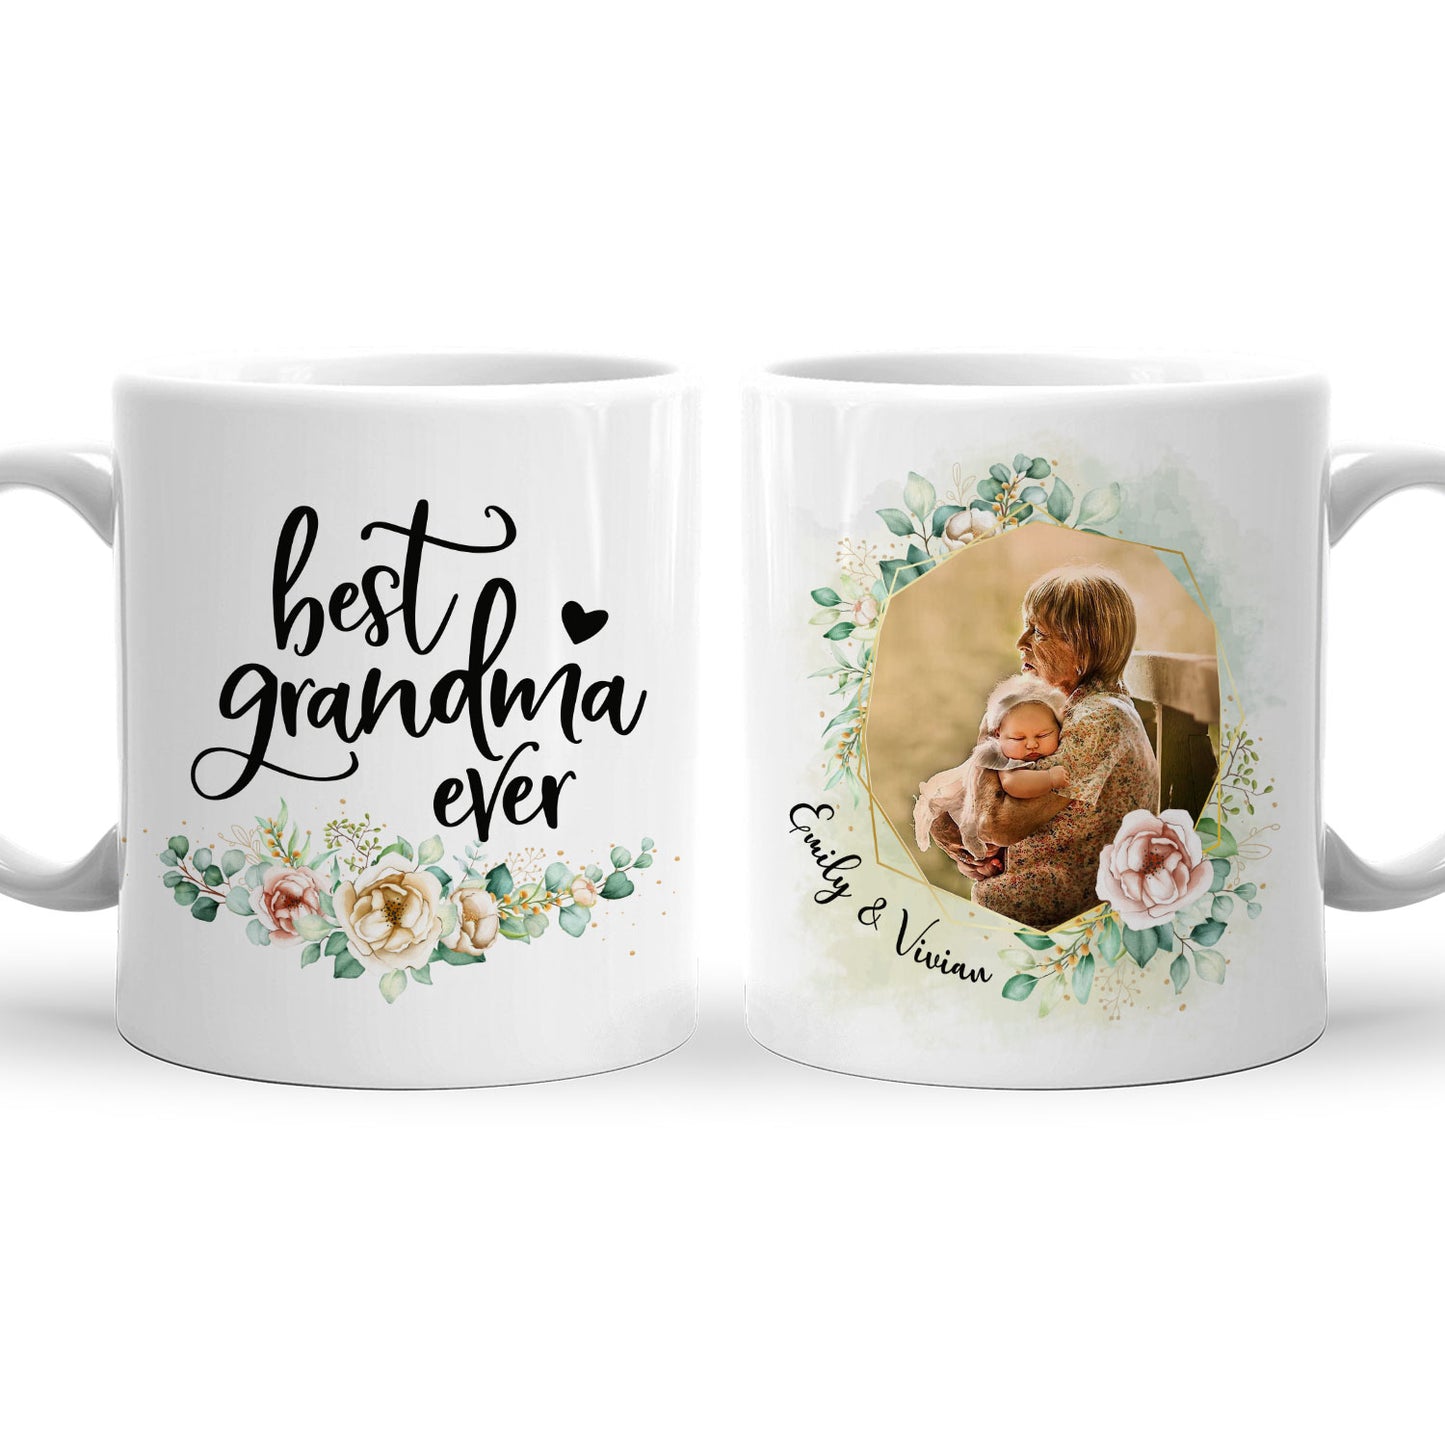 Best Grandma Ever Custom Mug With Your Name & Photo